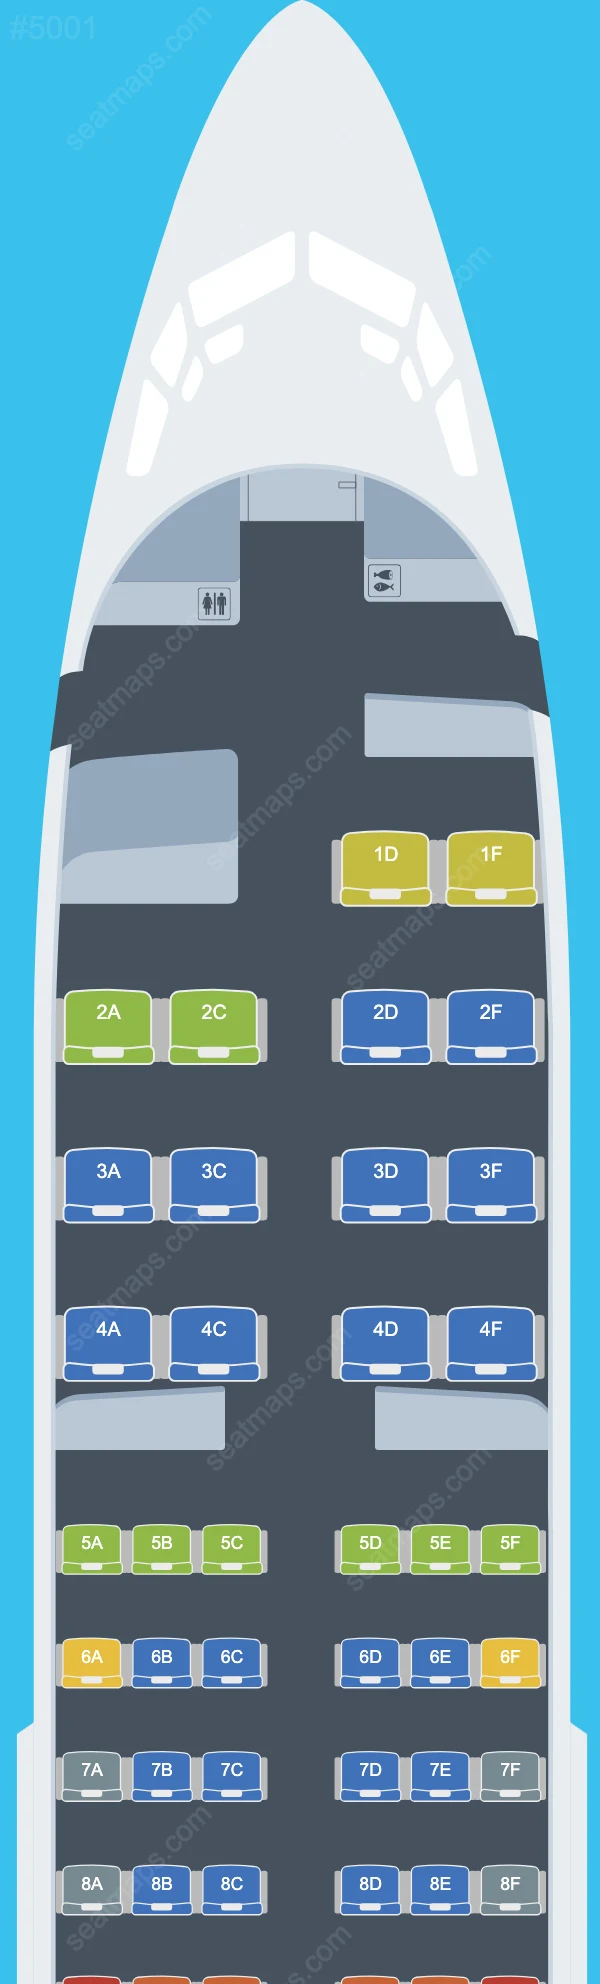 Tarom Boeing 737 Mappe dei posti a sedere 737-700